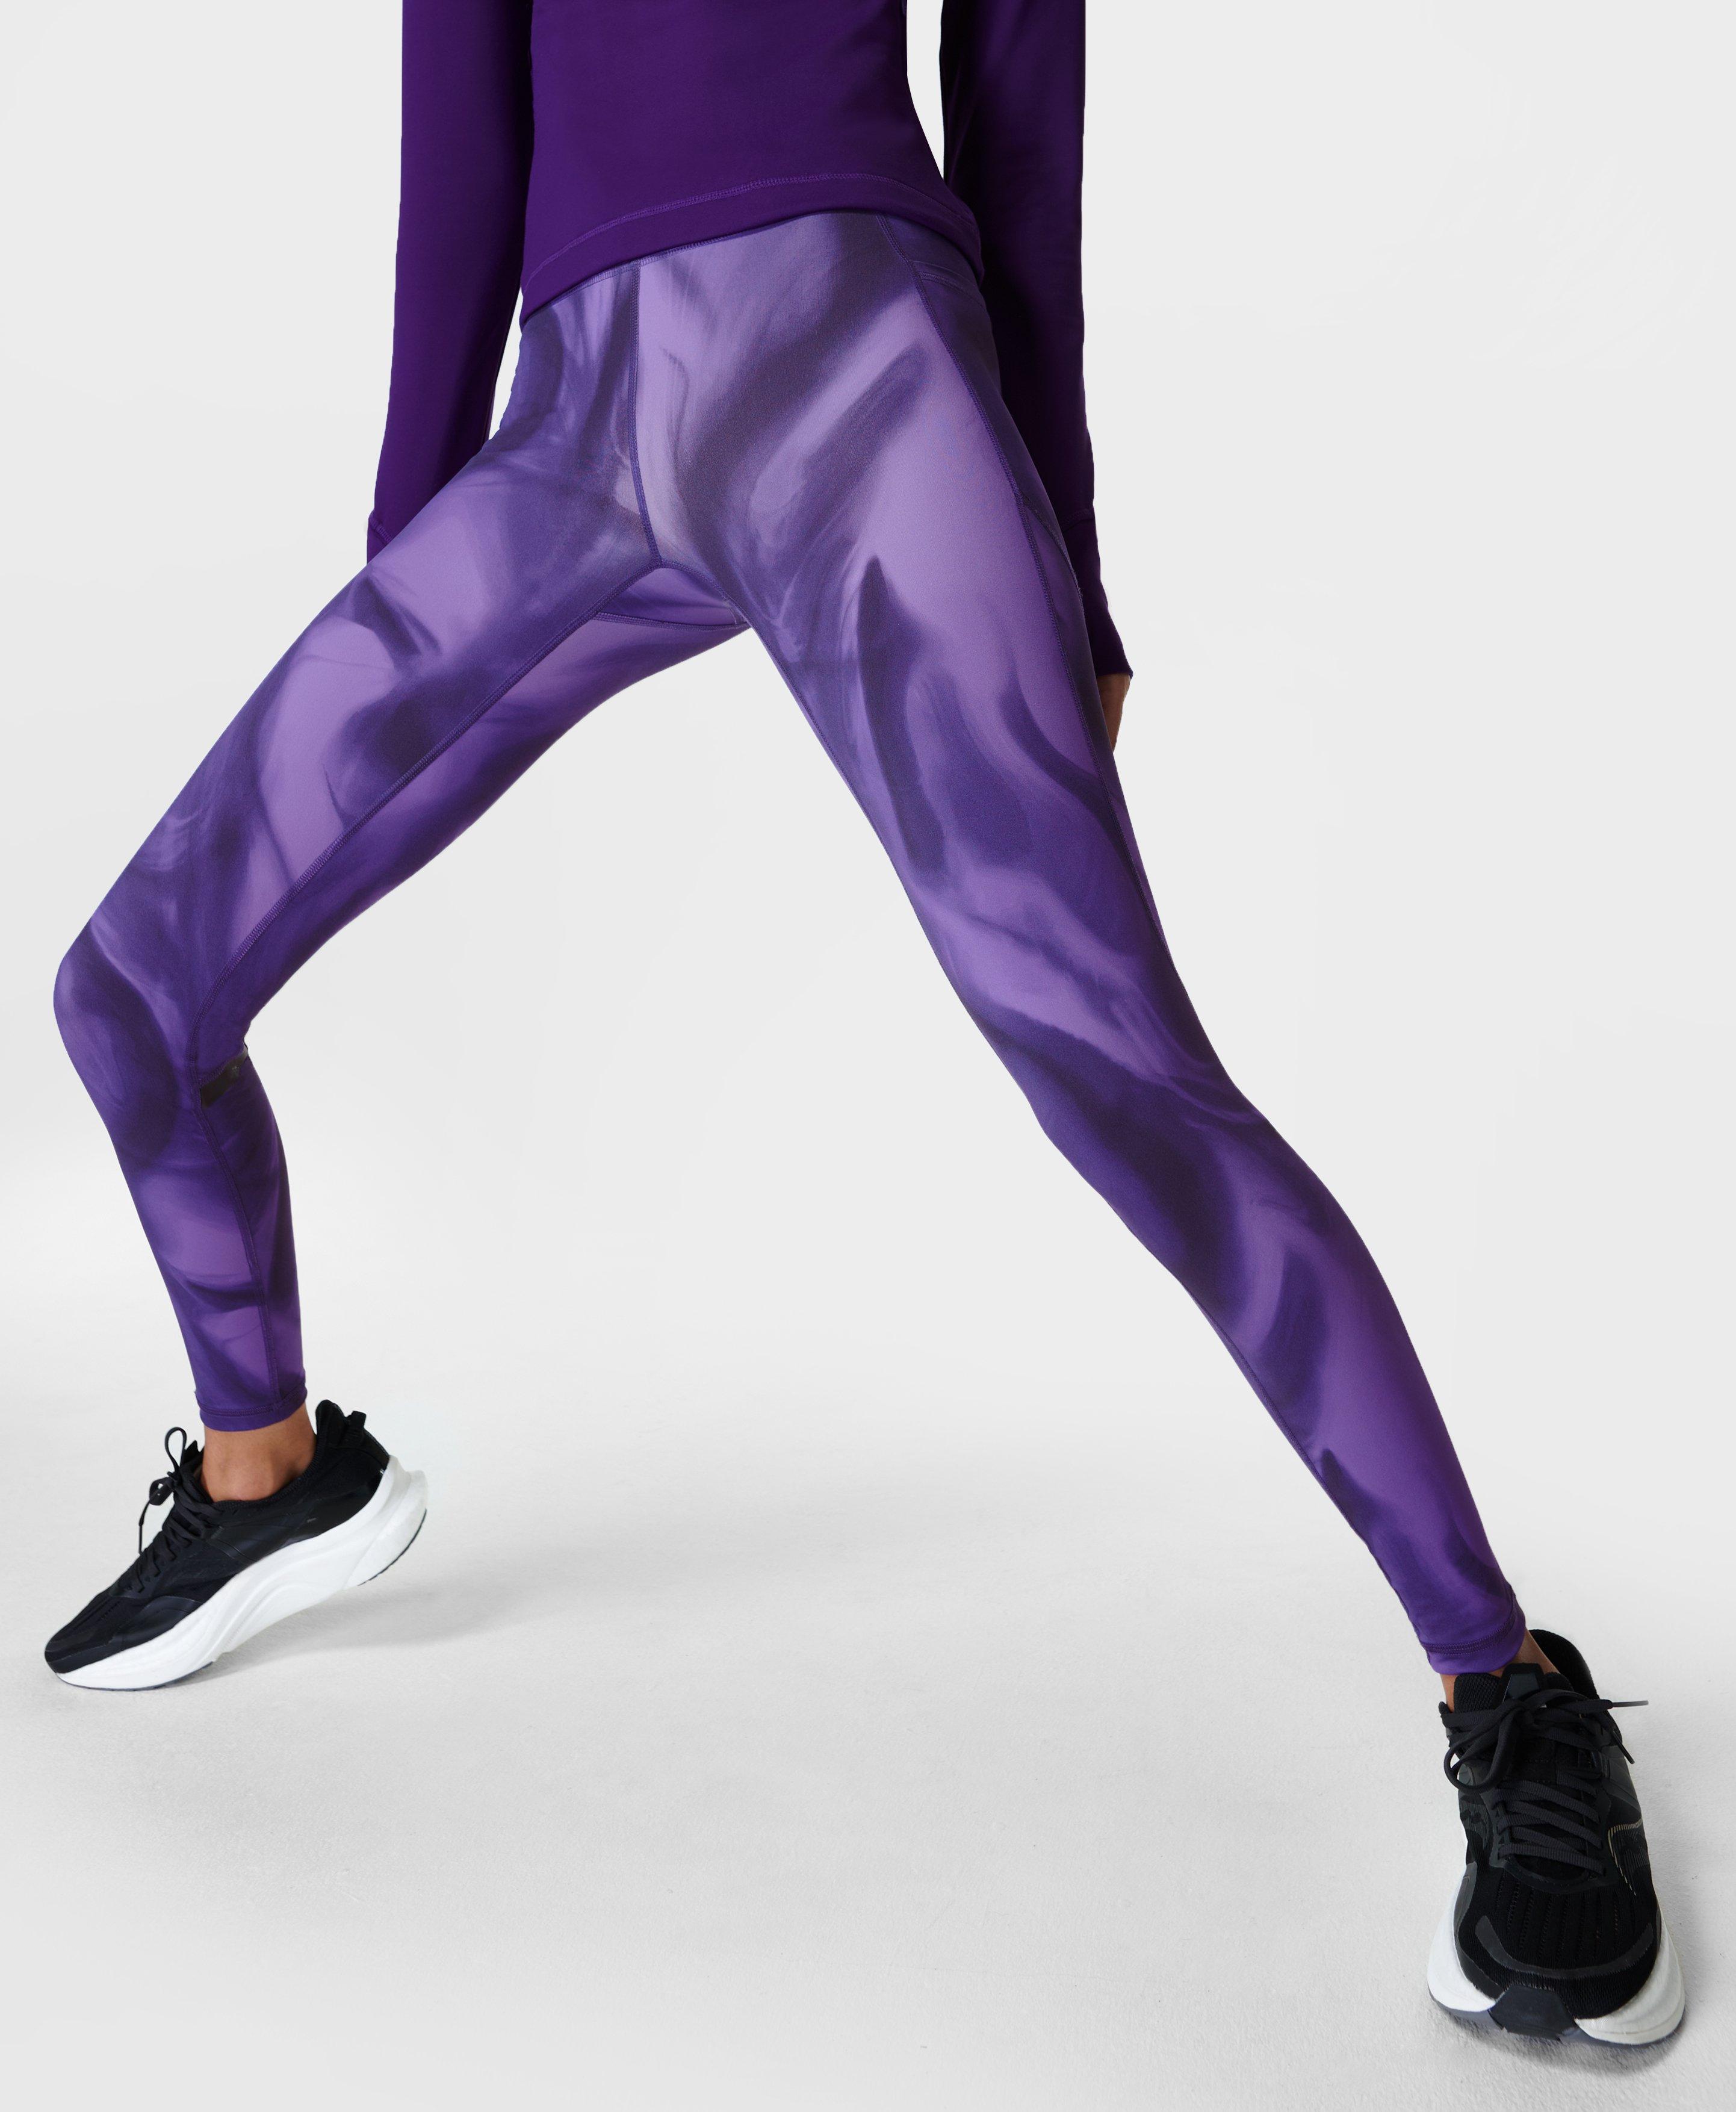 Pockets For Women - Sweaty Betty Zero Gravity High-Waisted Running Leggings,  Purple, Women's